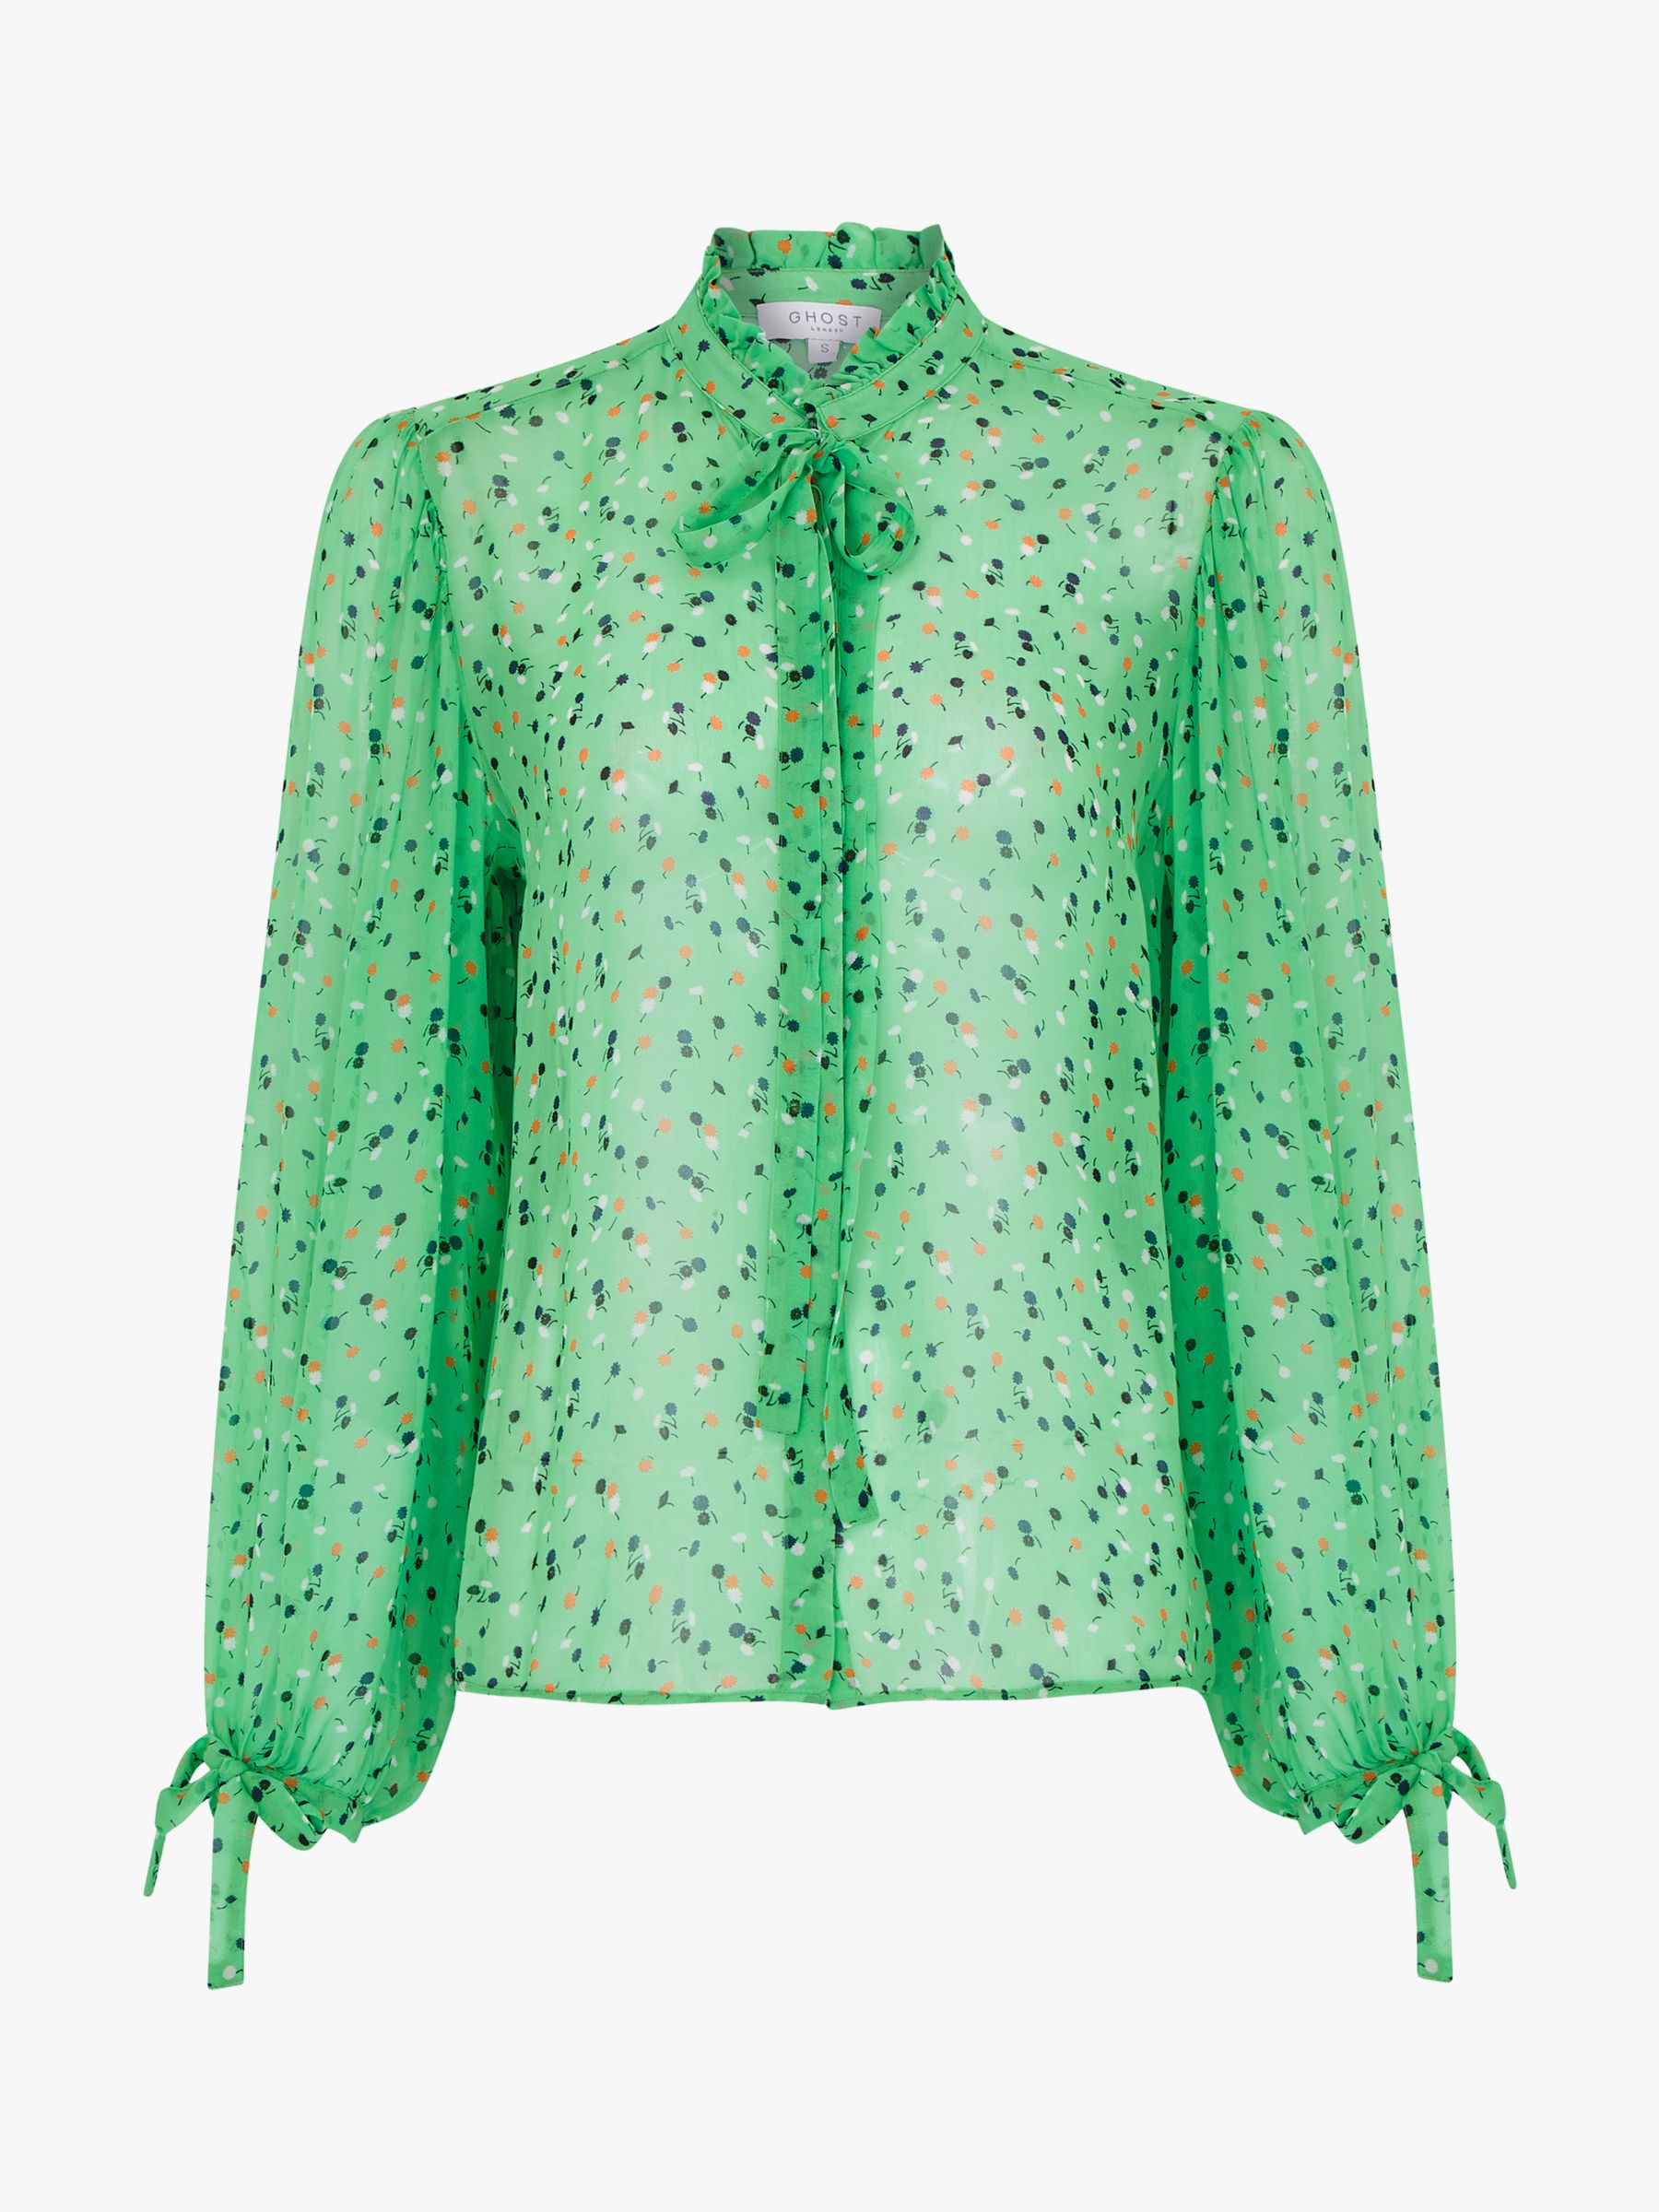 green sheer blouse